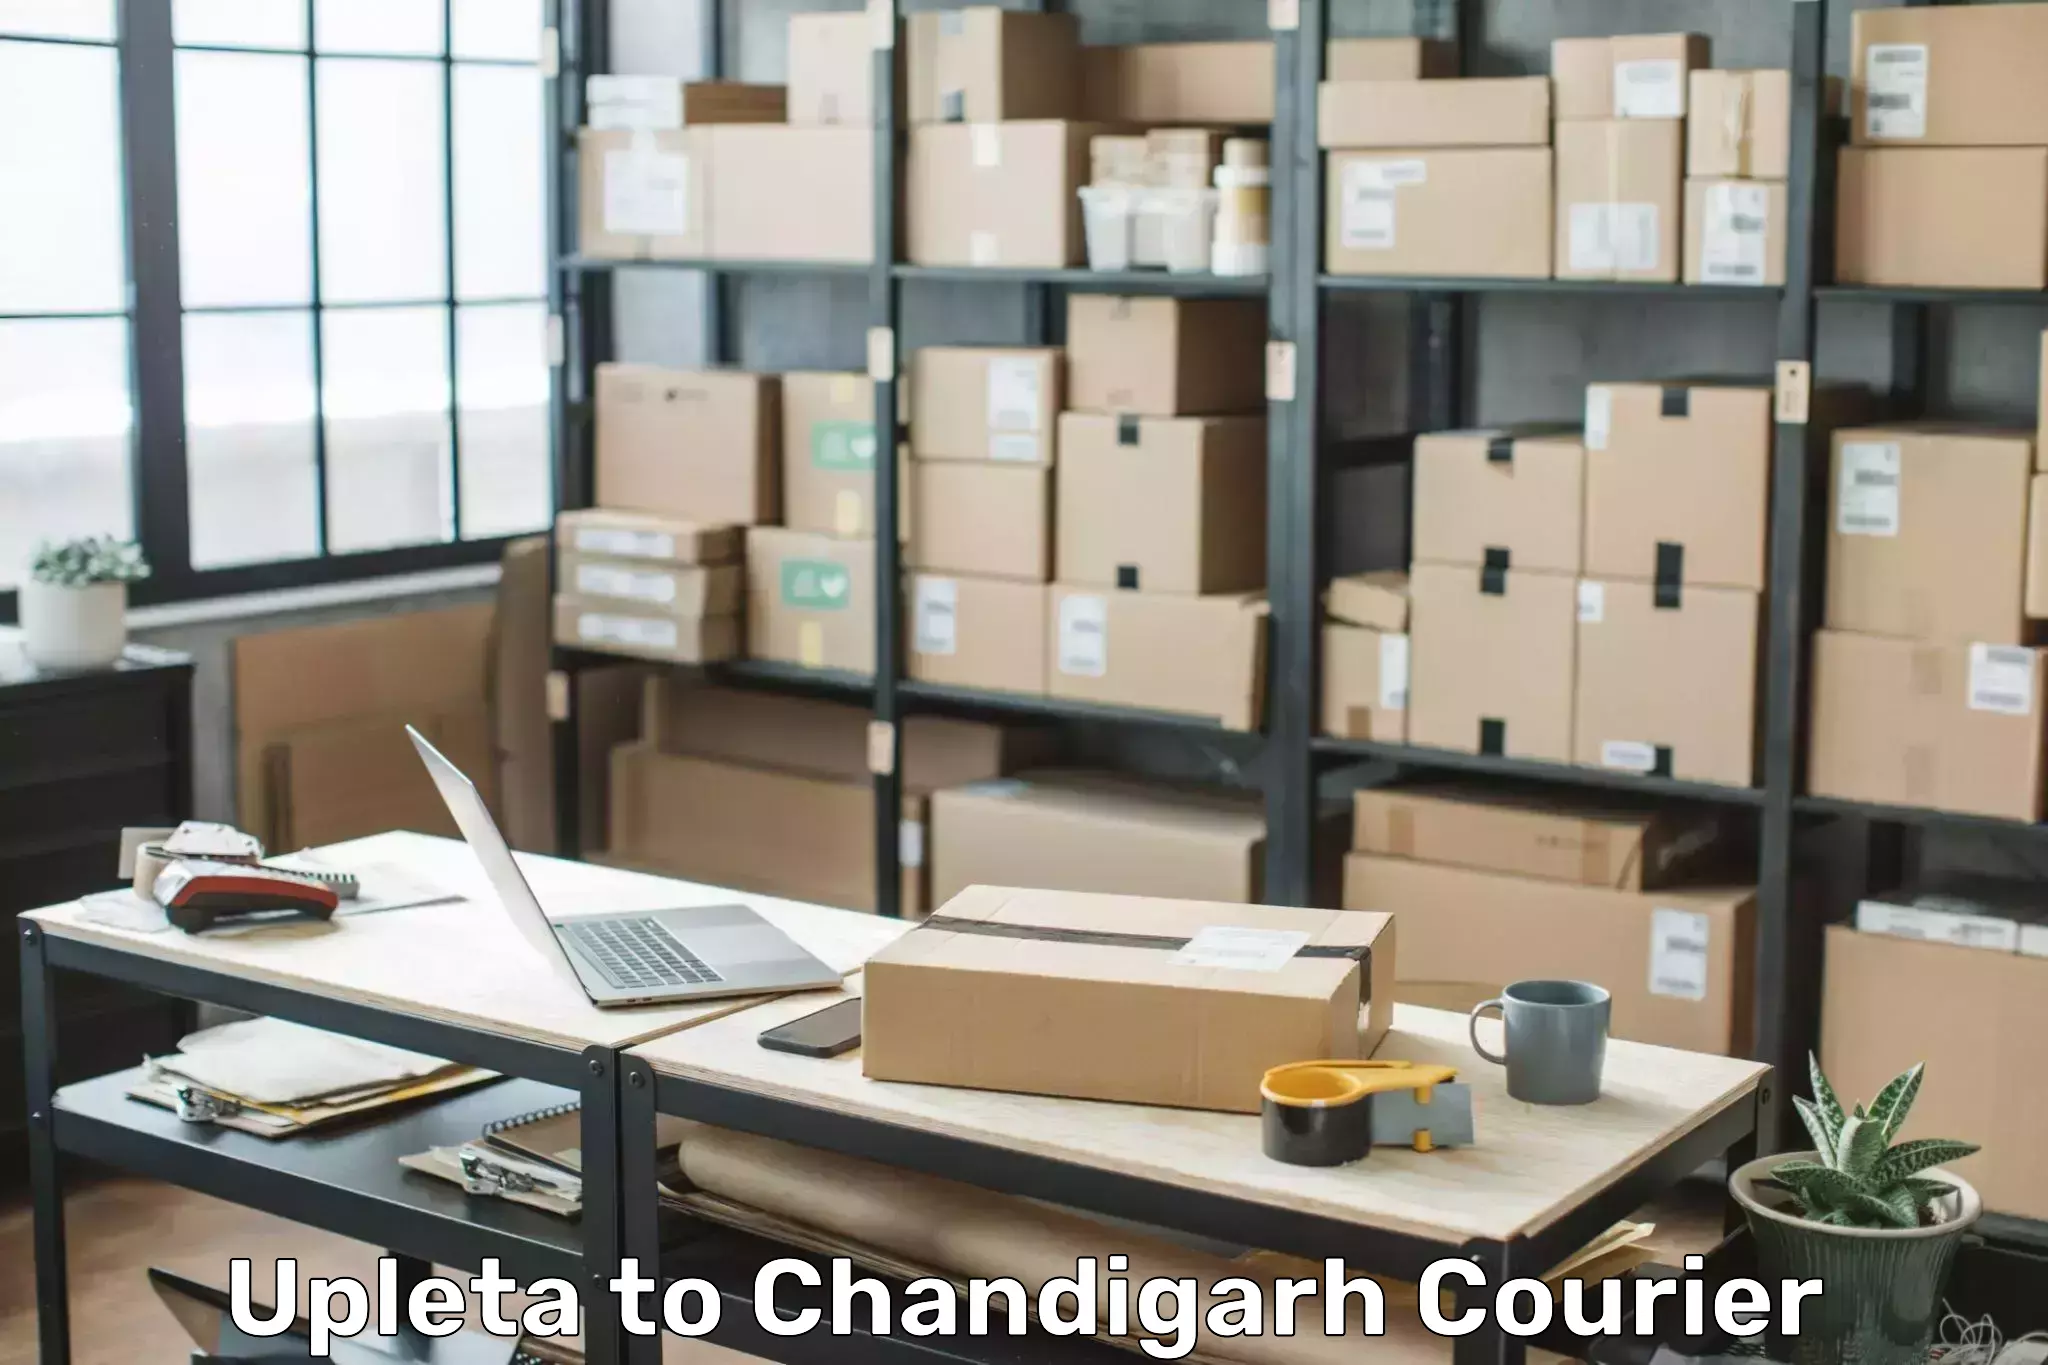 Luggage transport company Upleta to Panjab University Chandigarh